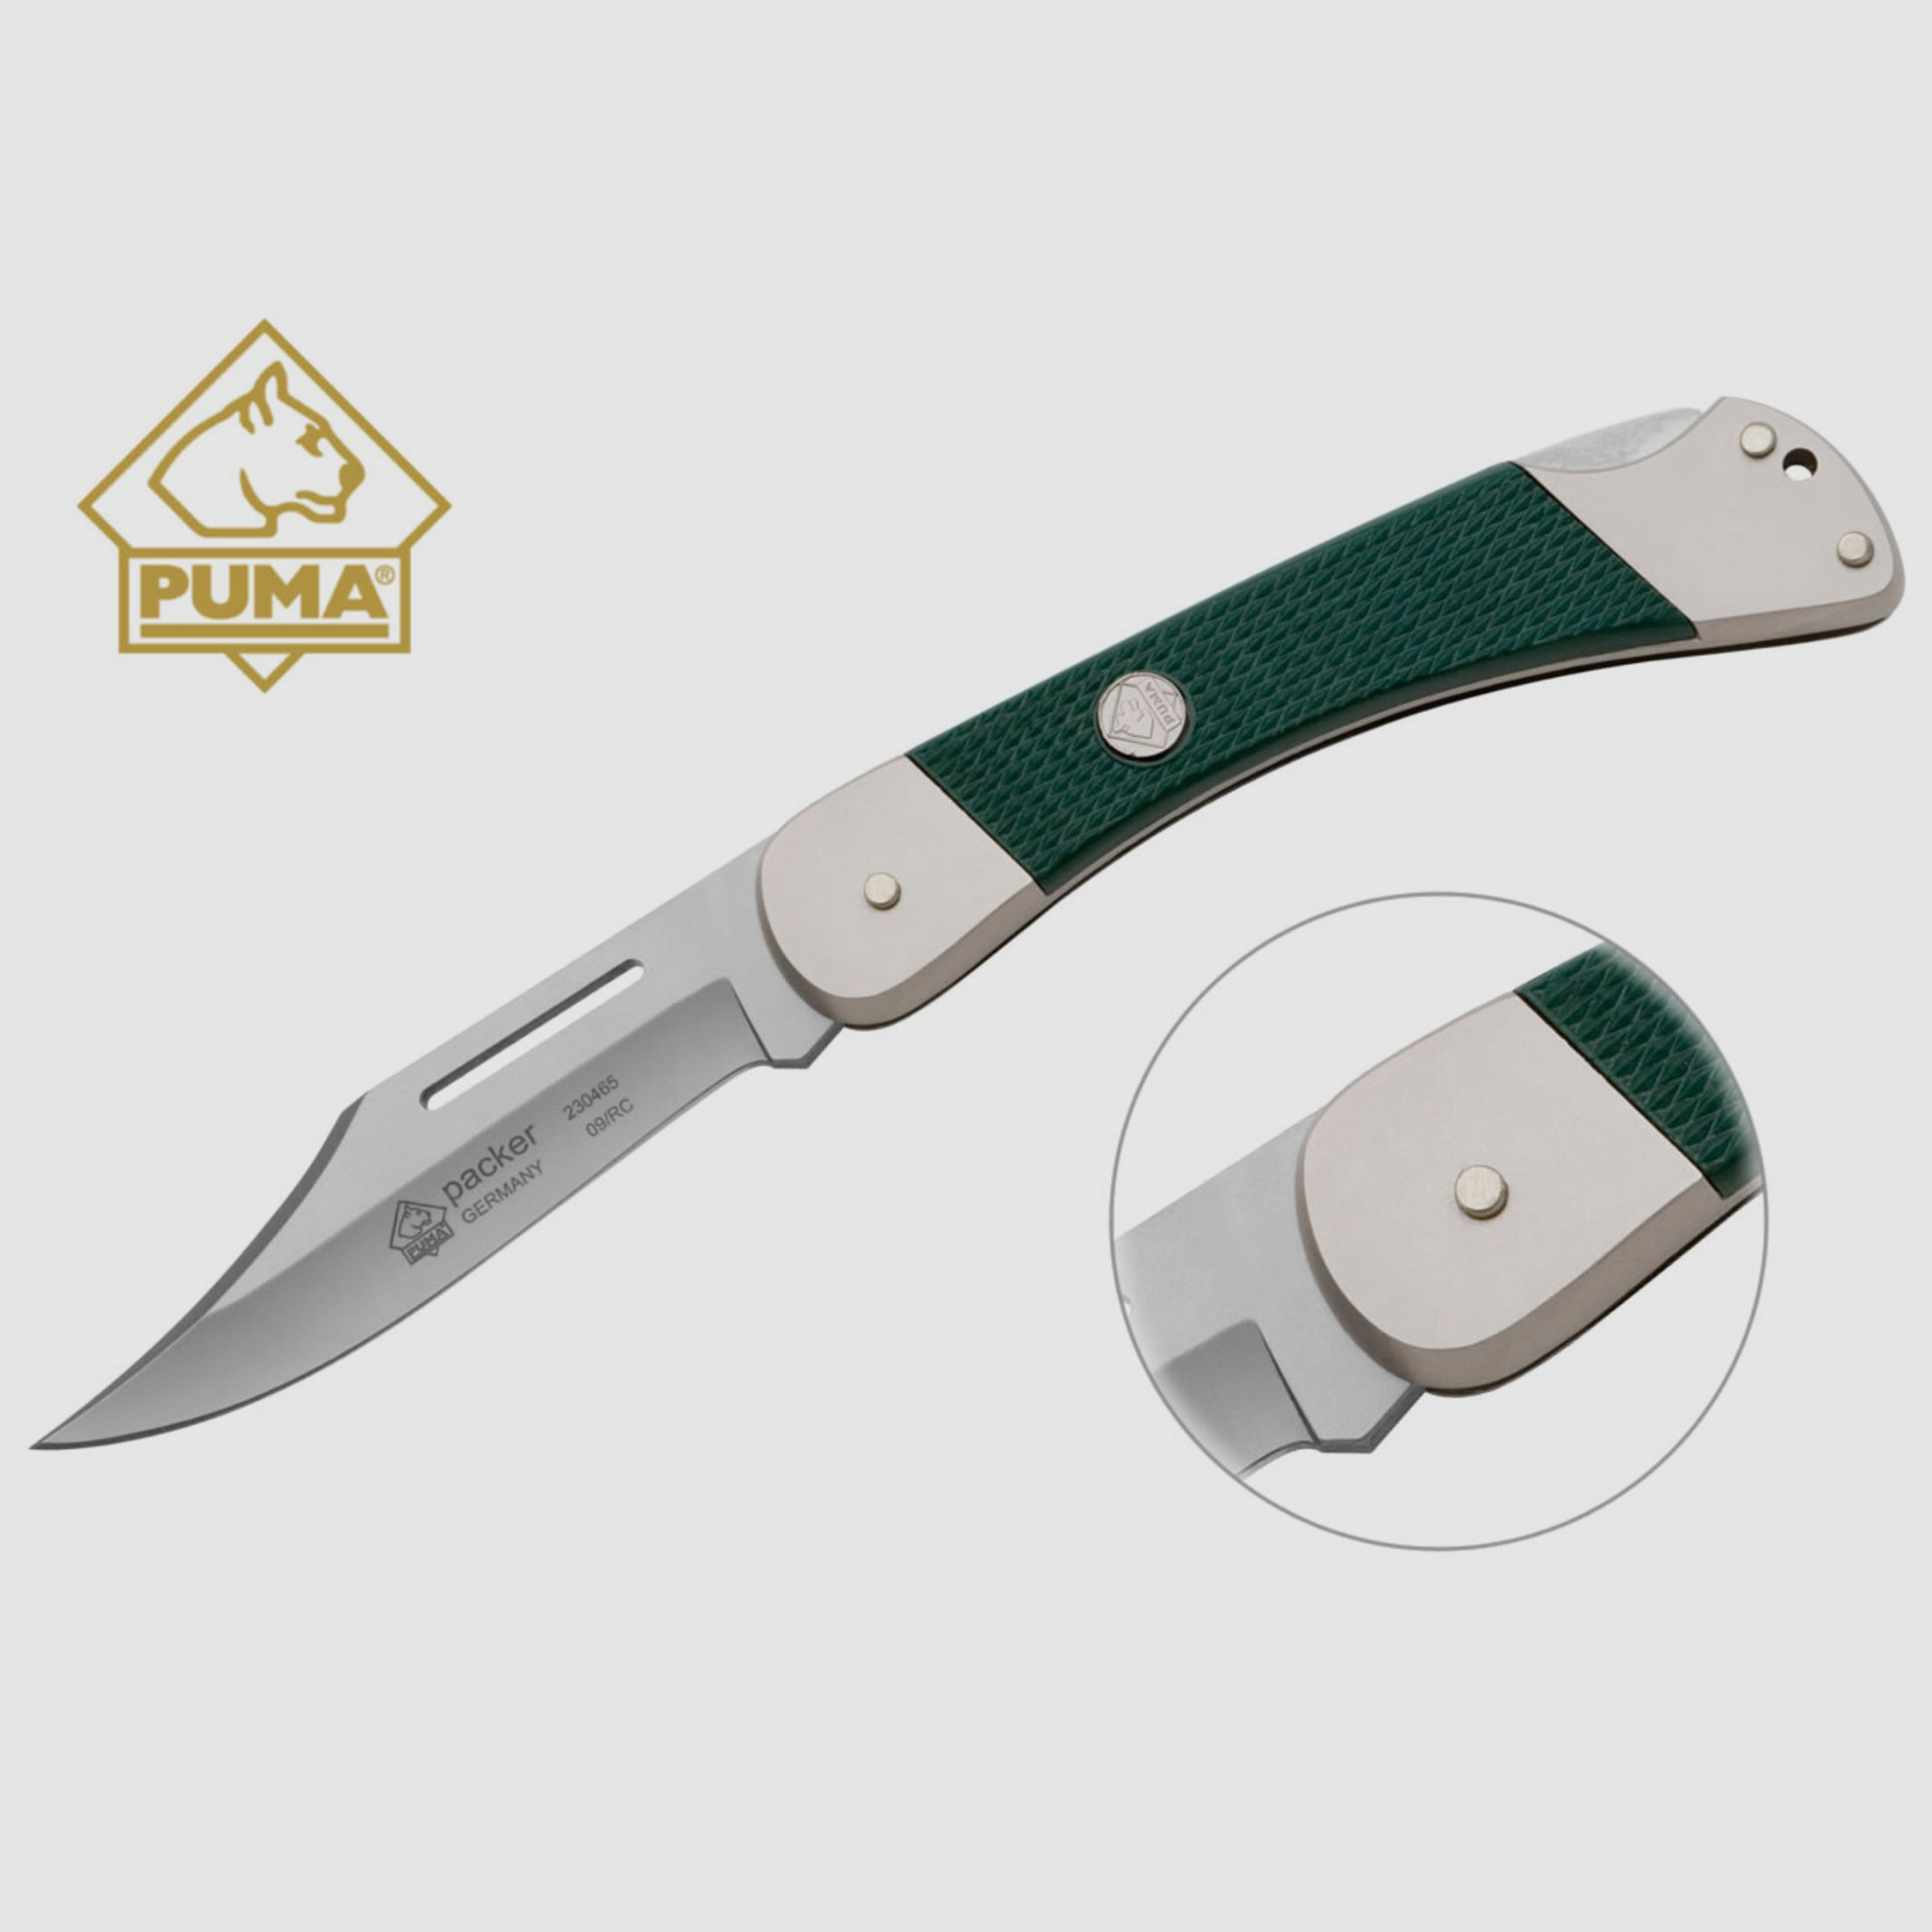 Taschenmesser Puma Packer Stahl 1.4110 KlingenlĂ¤nge 8,2 Griff Kunststoff (P18)